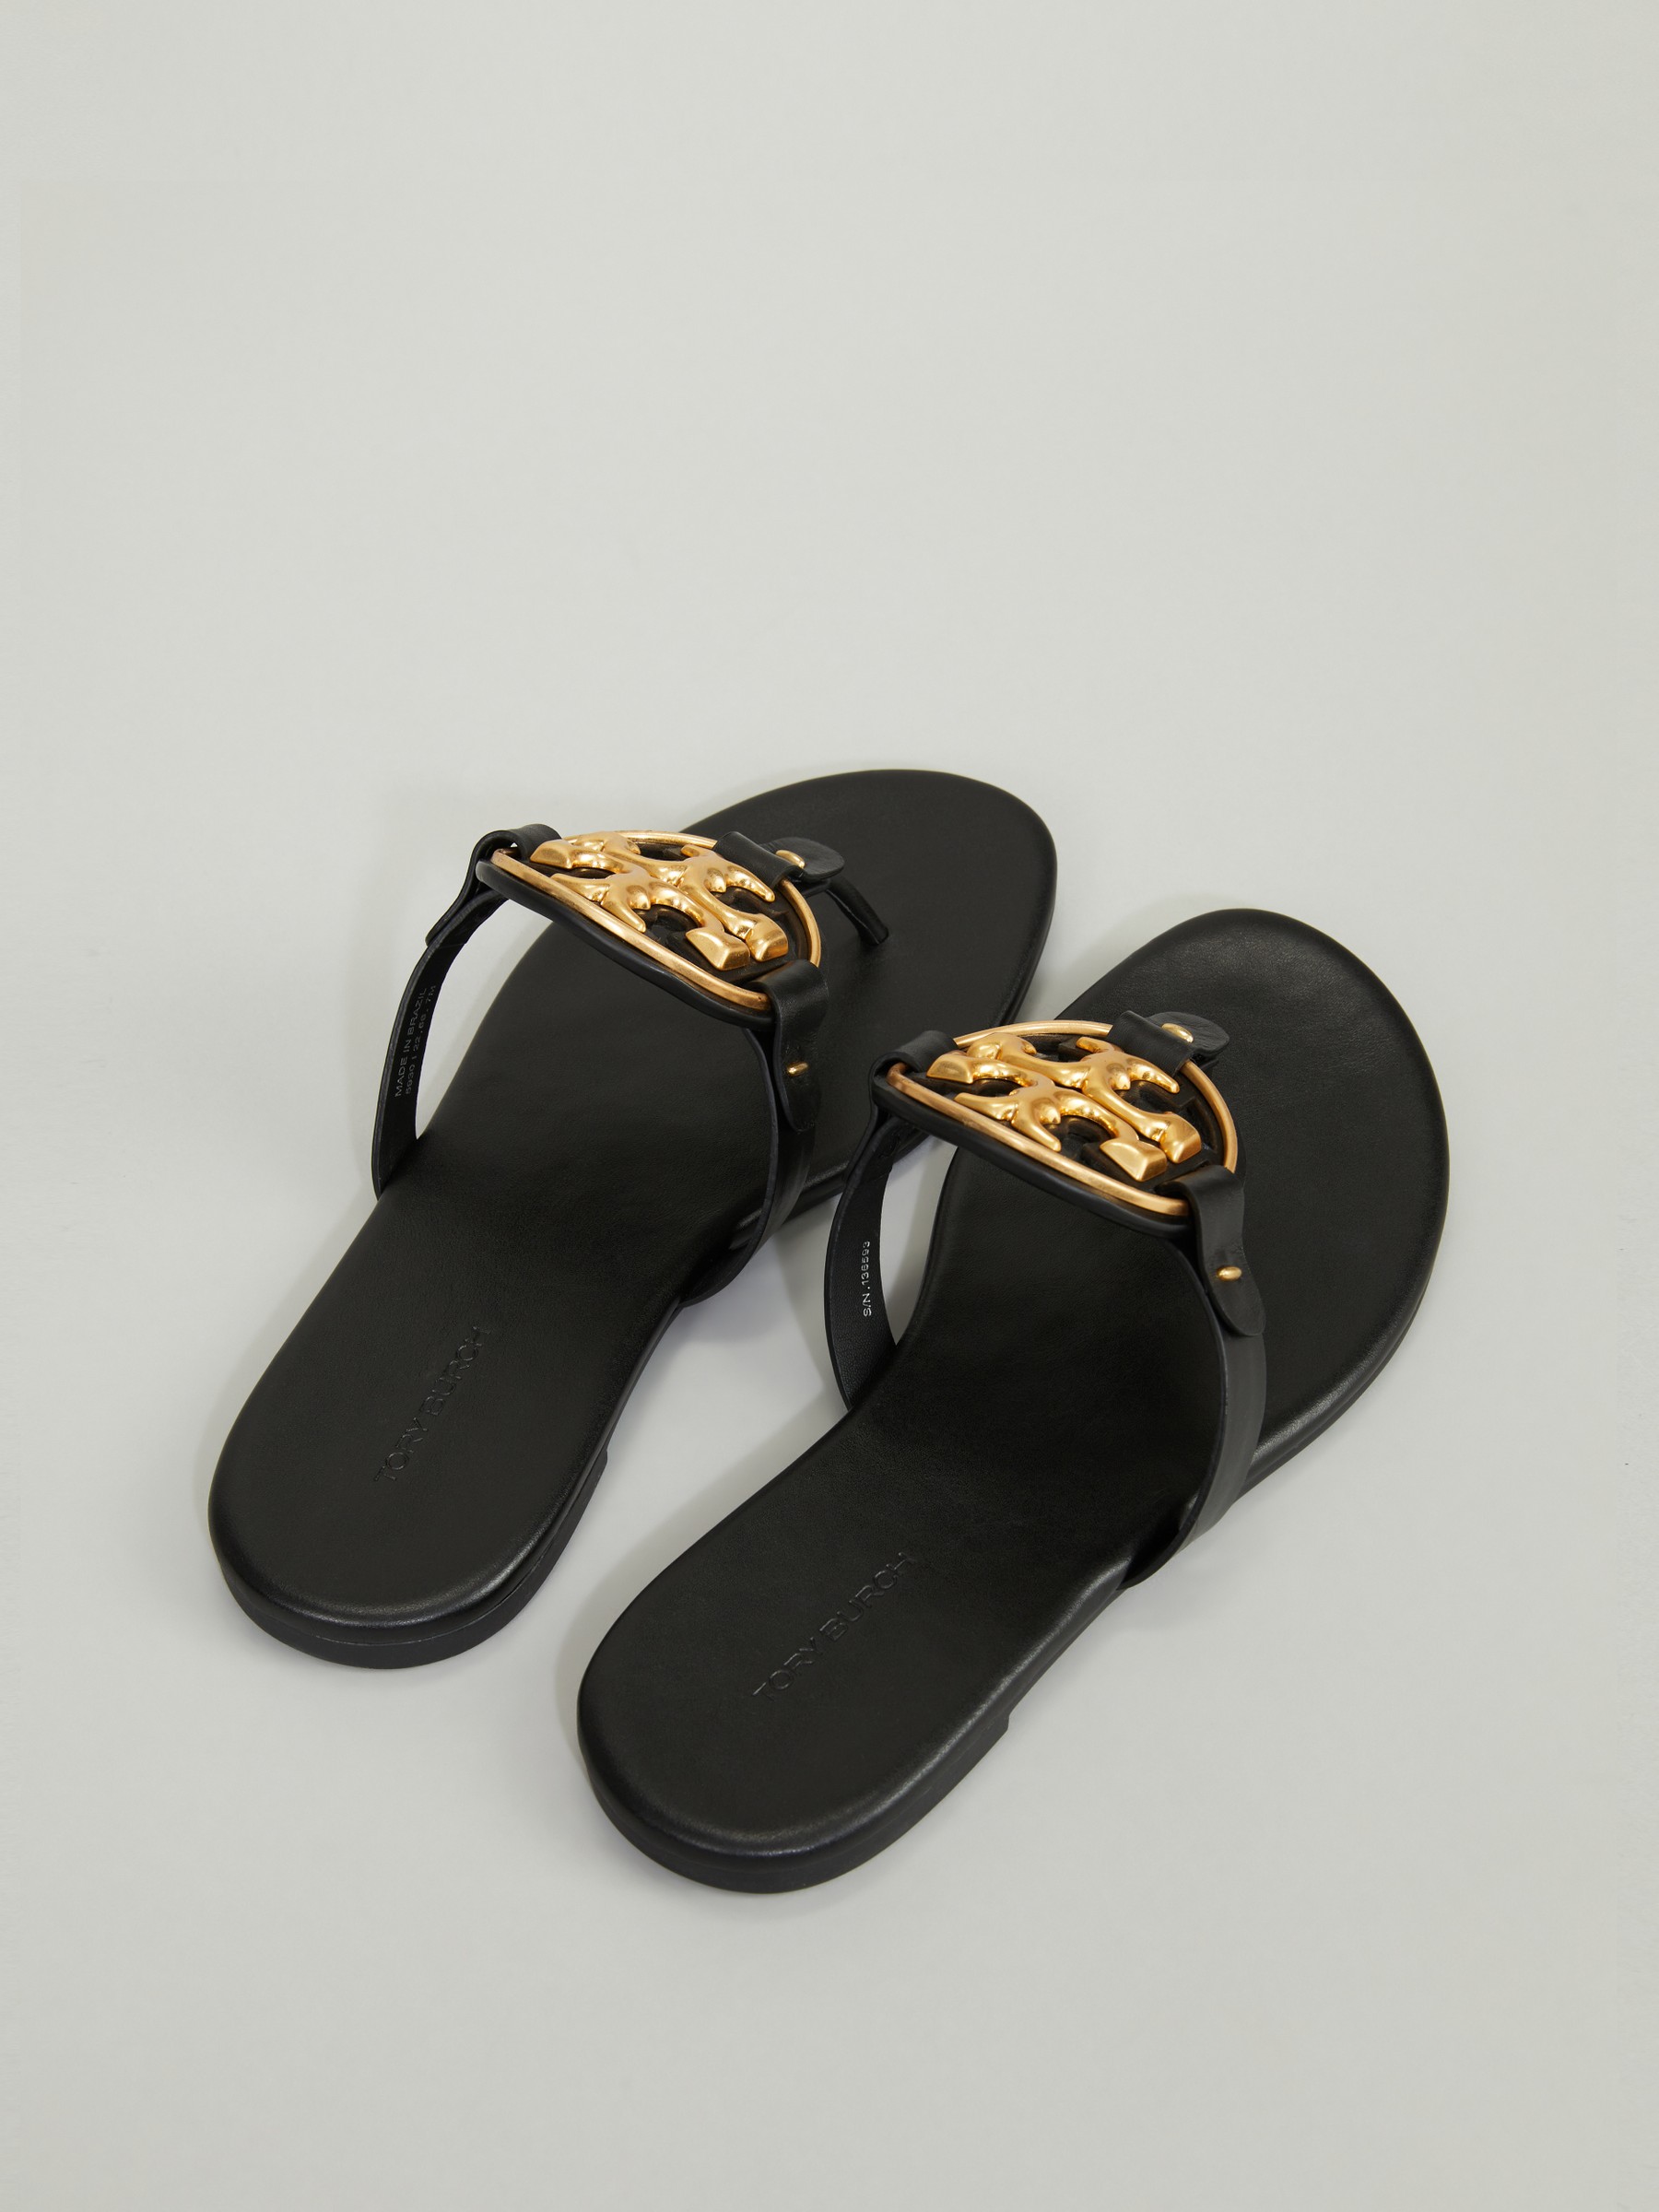 Tory Burch Sandals 'Miller' Black | Heeled Sandals